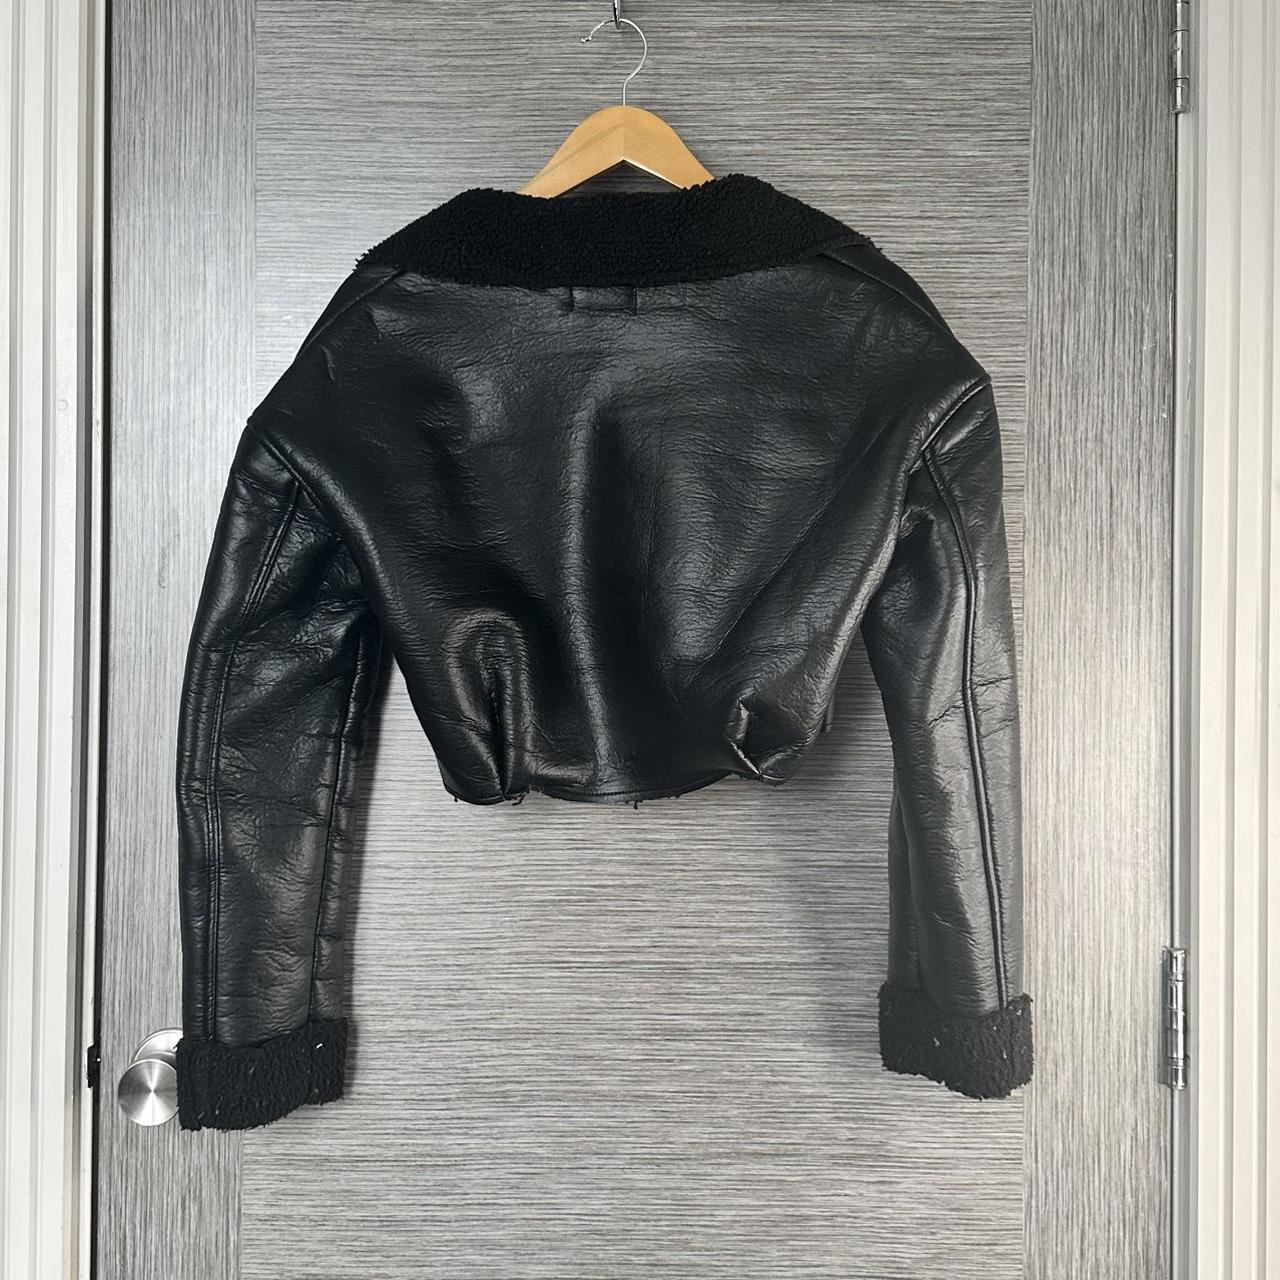 Black molly mae short coat/ jacket PLT - Depop